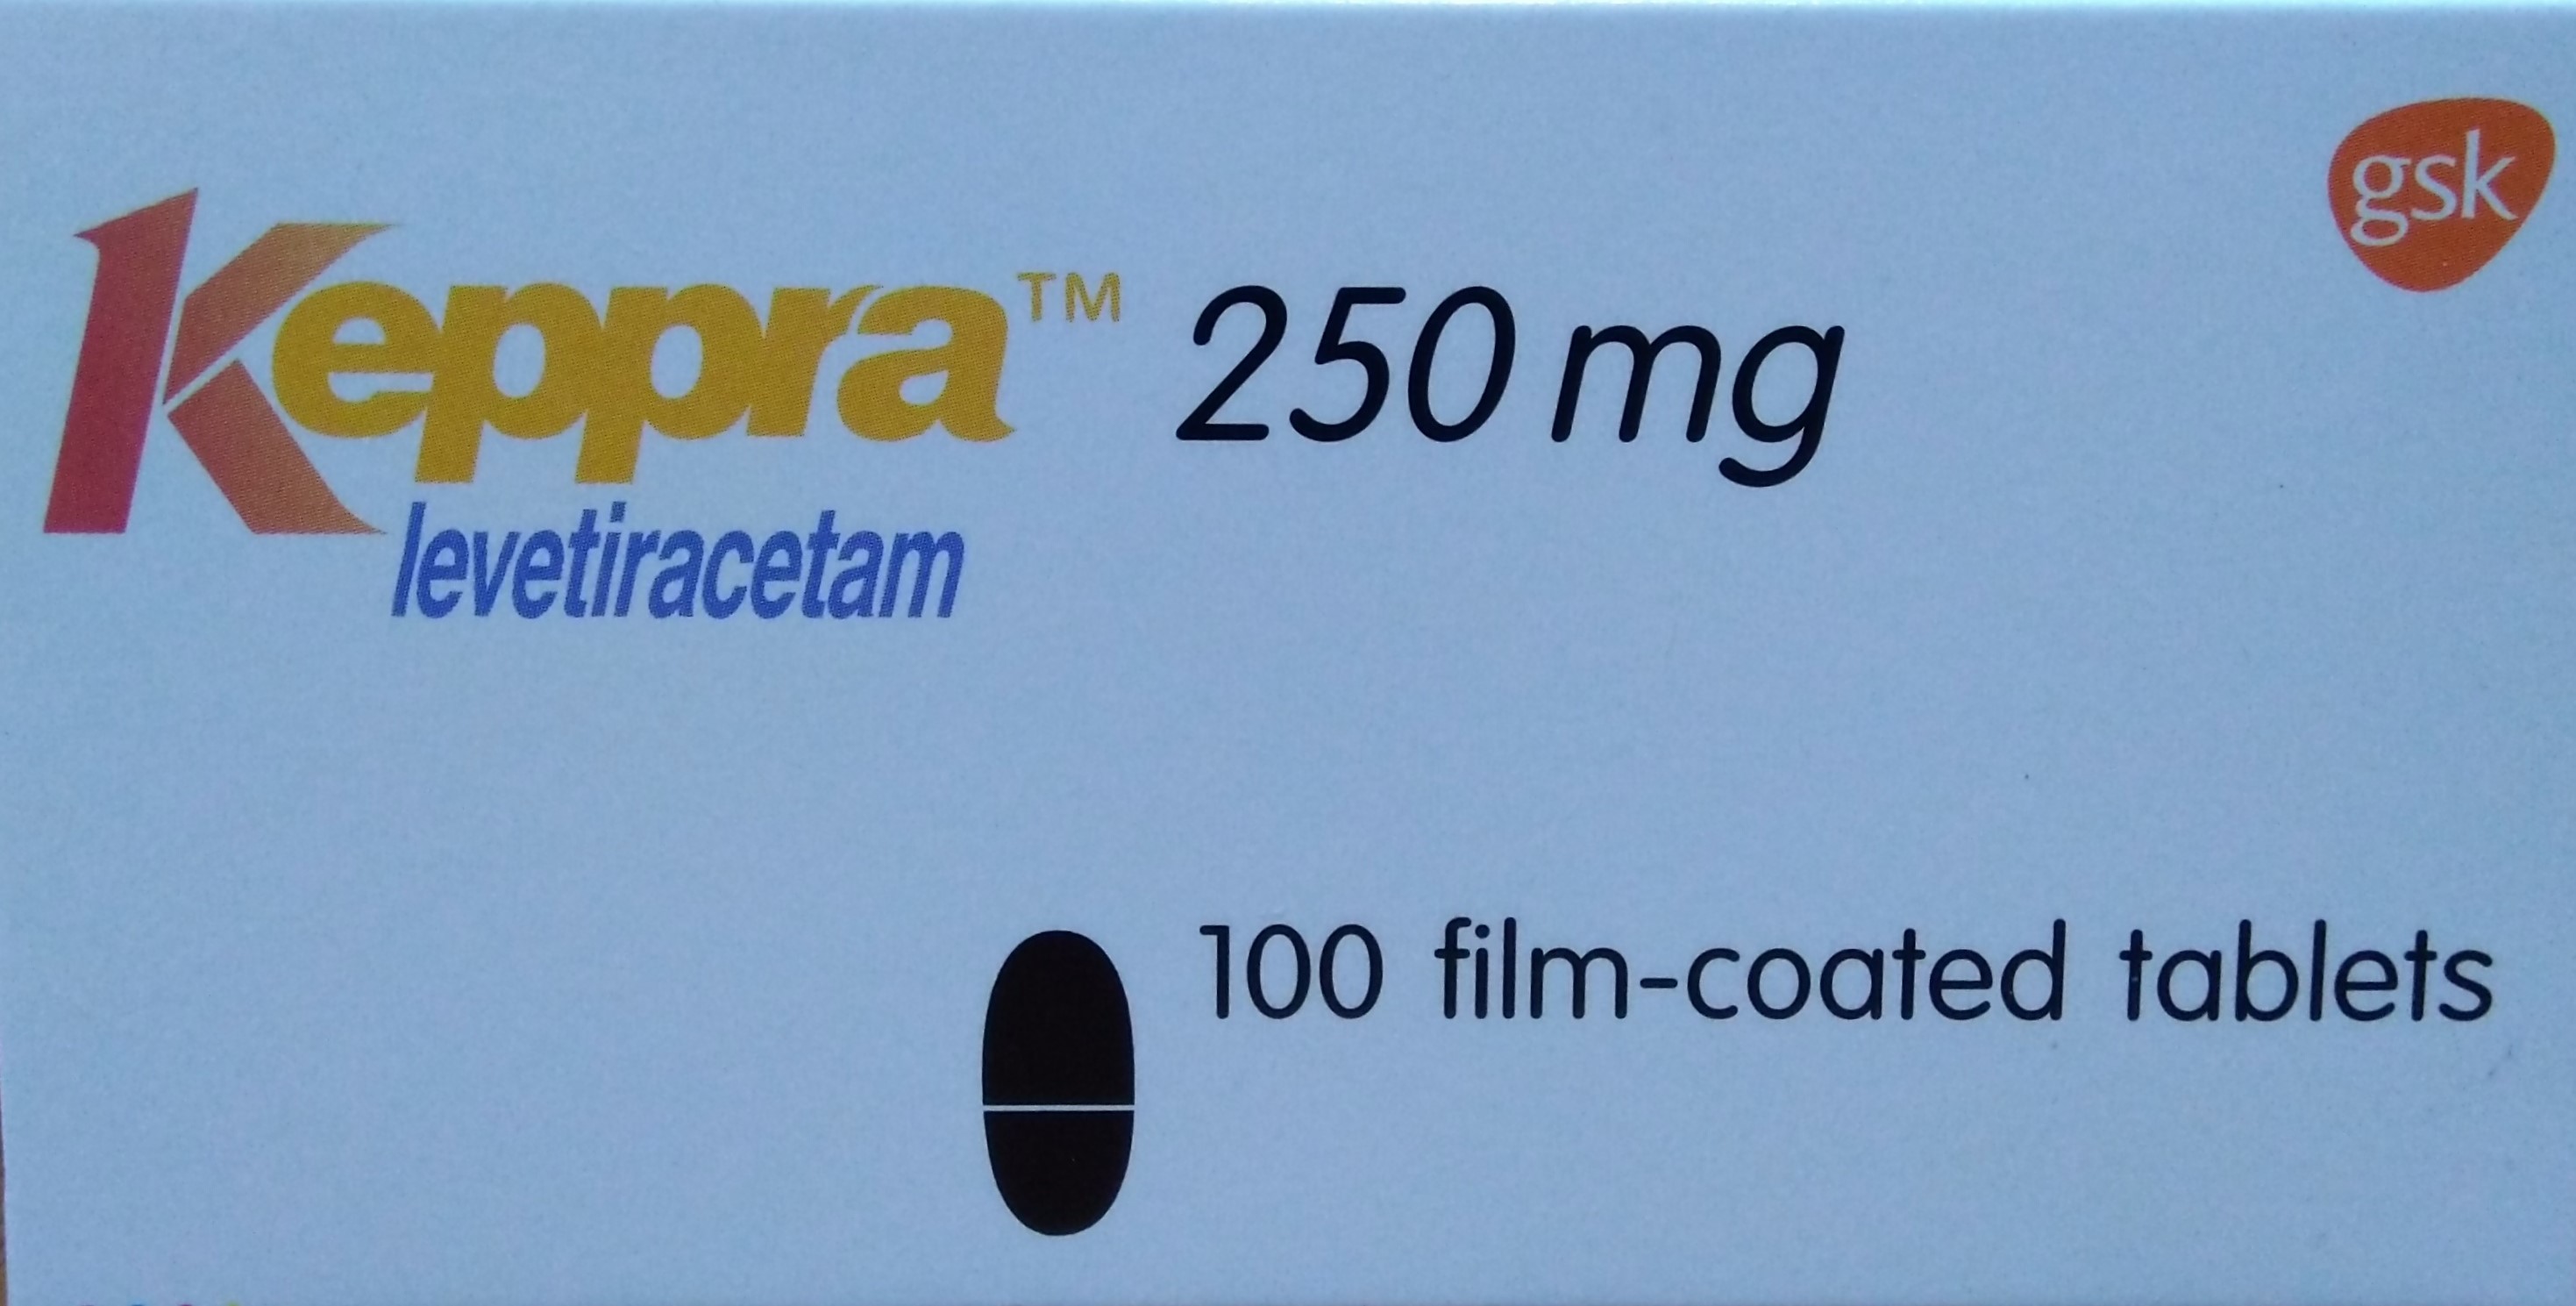 Keppra Tablets 250mg°